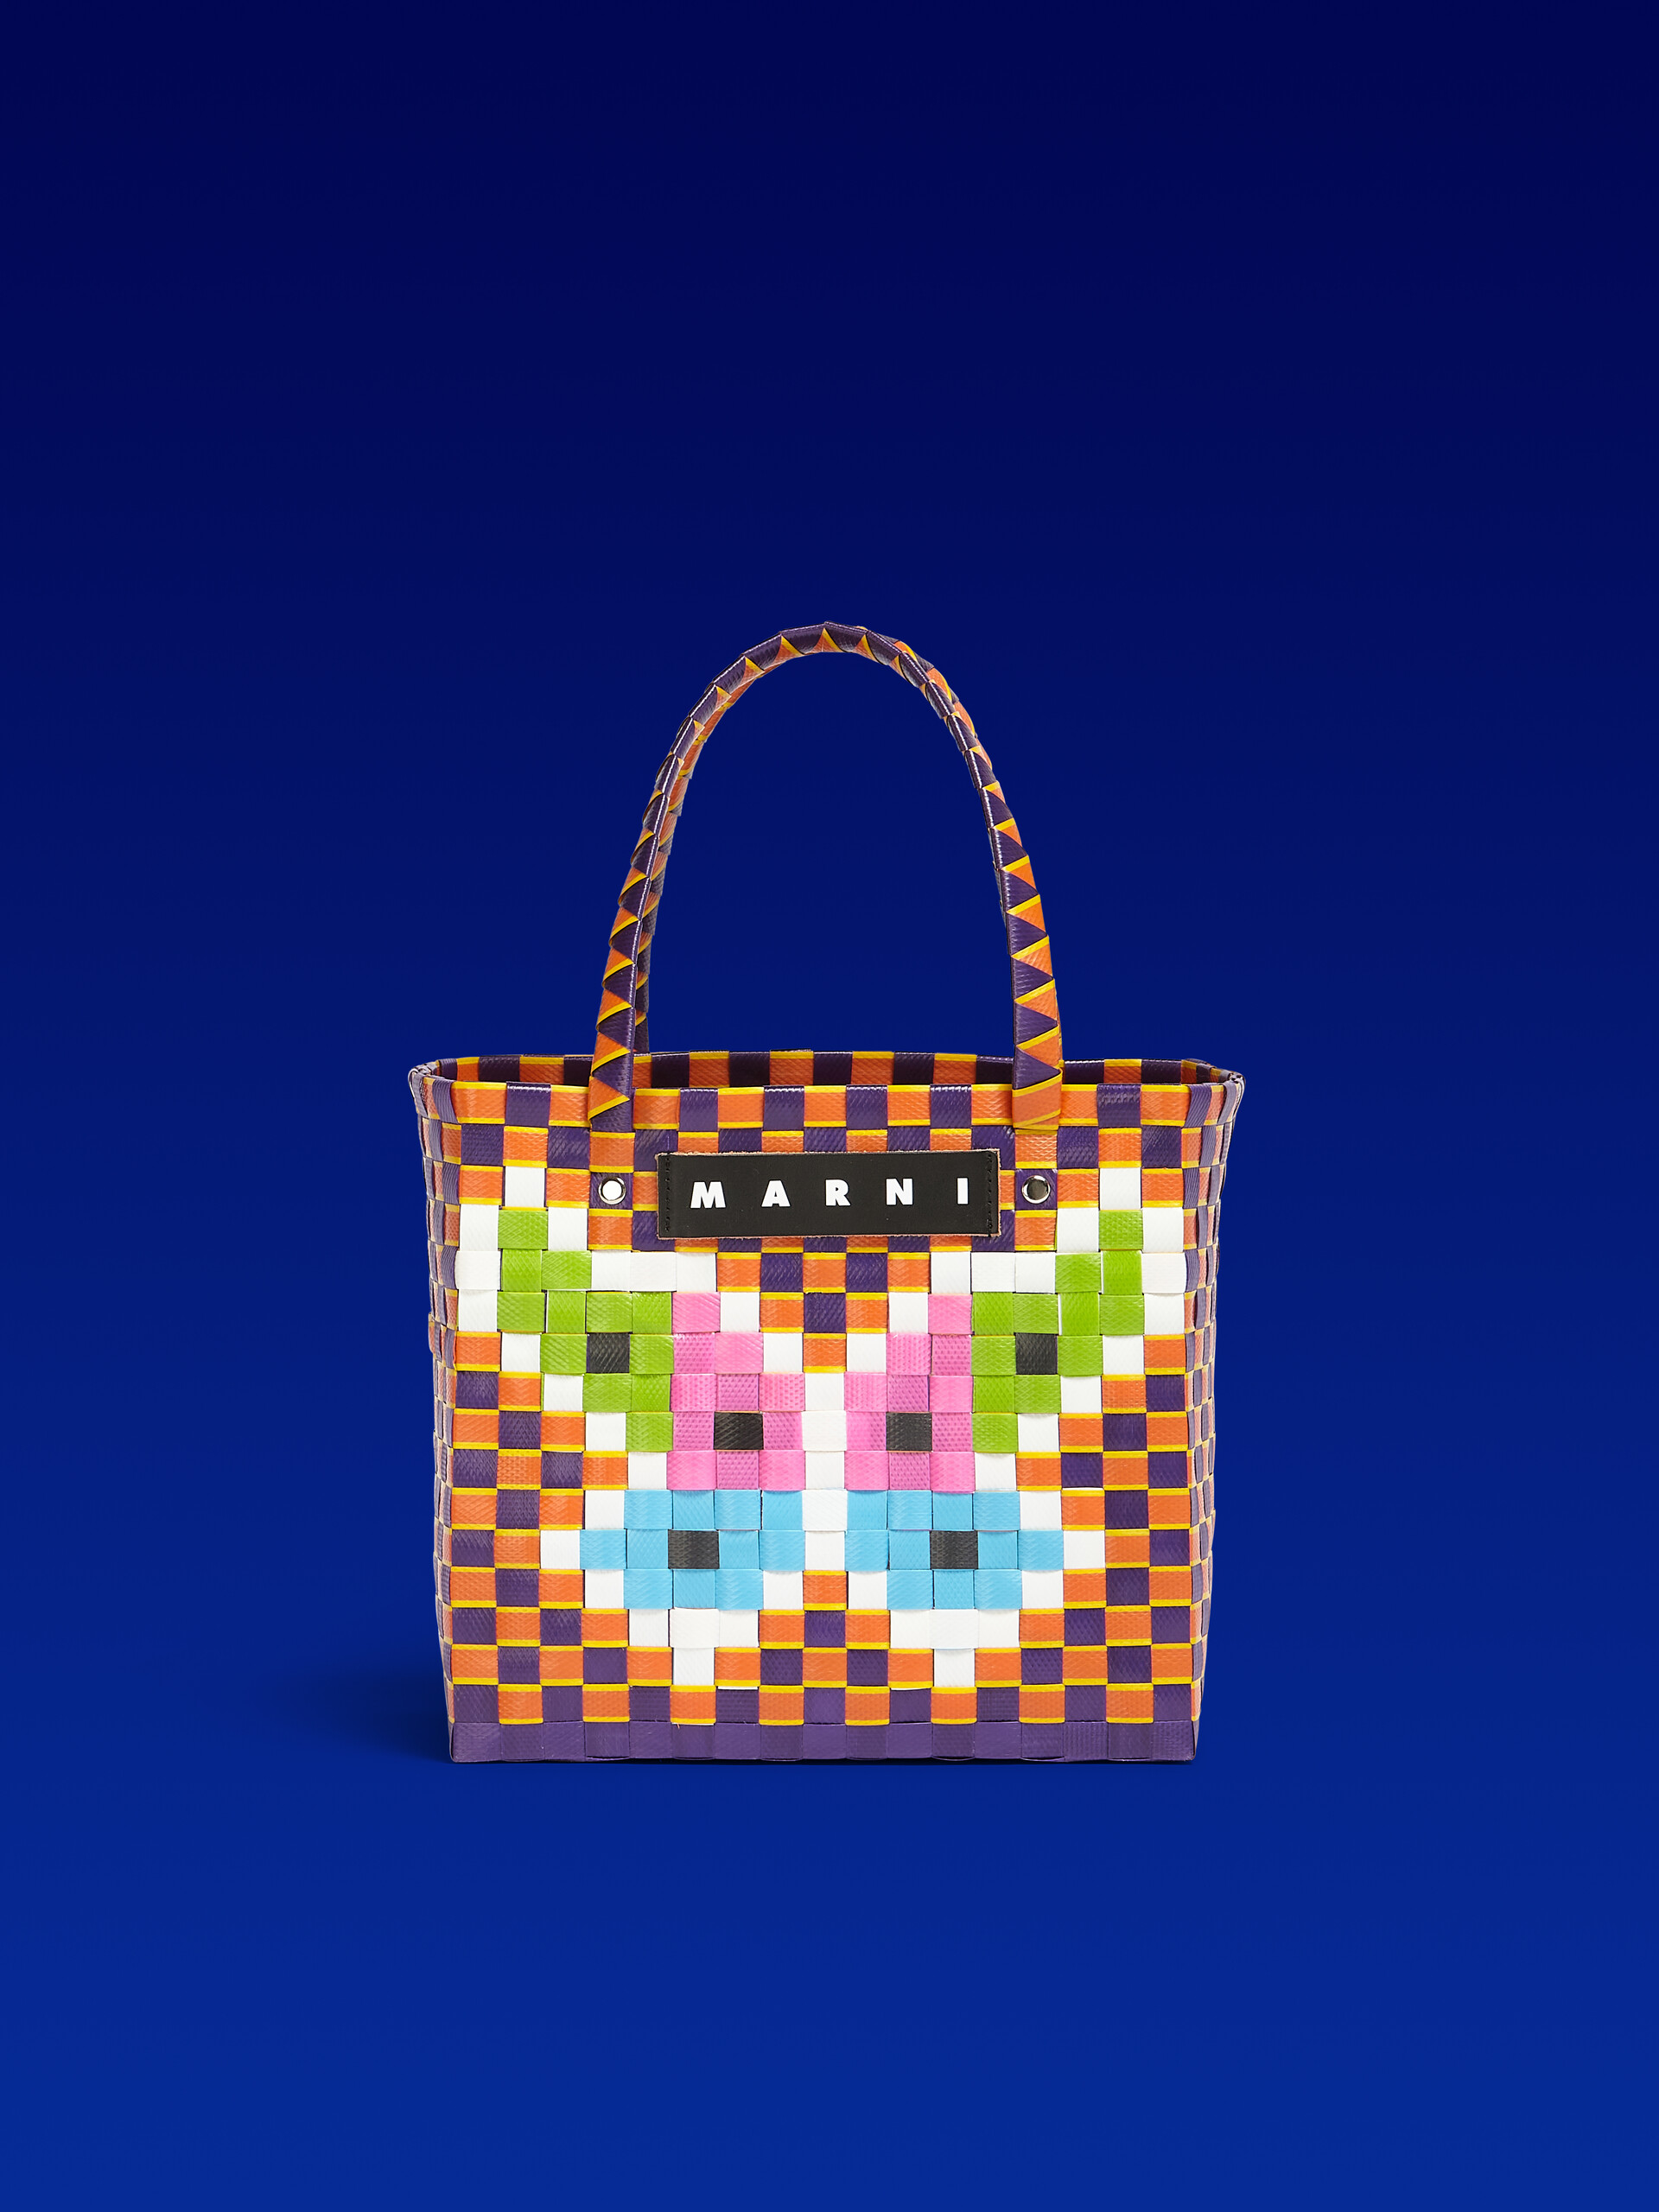 MARNI MARKET FLOWER MINI BASKET bag in orange butterfly motif - Bags - Image 1